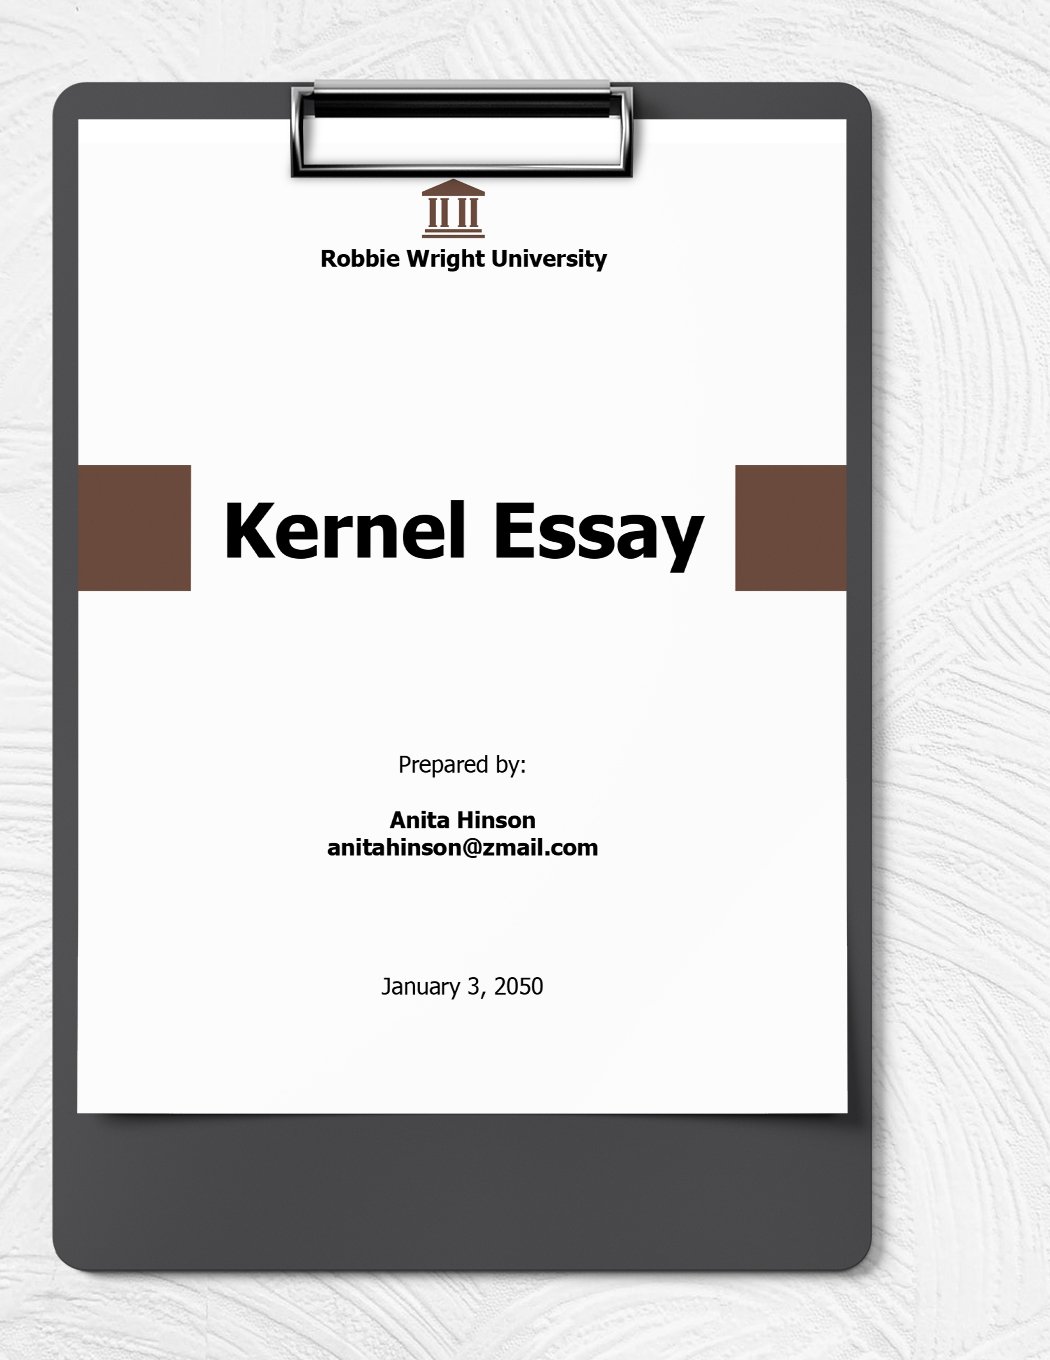 Kernel Essay Template in Word, Google Docs